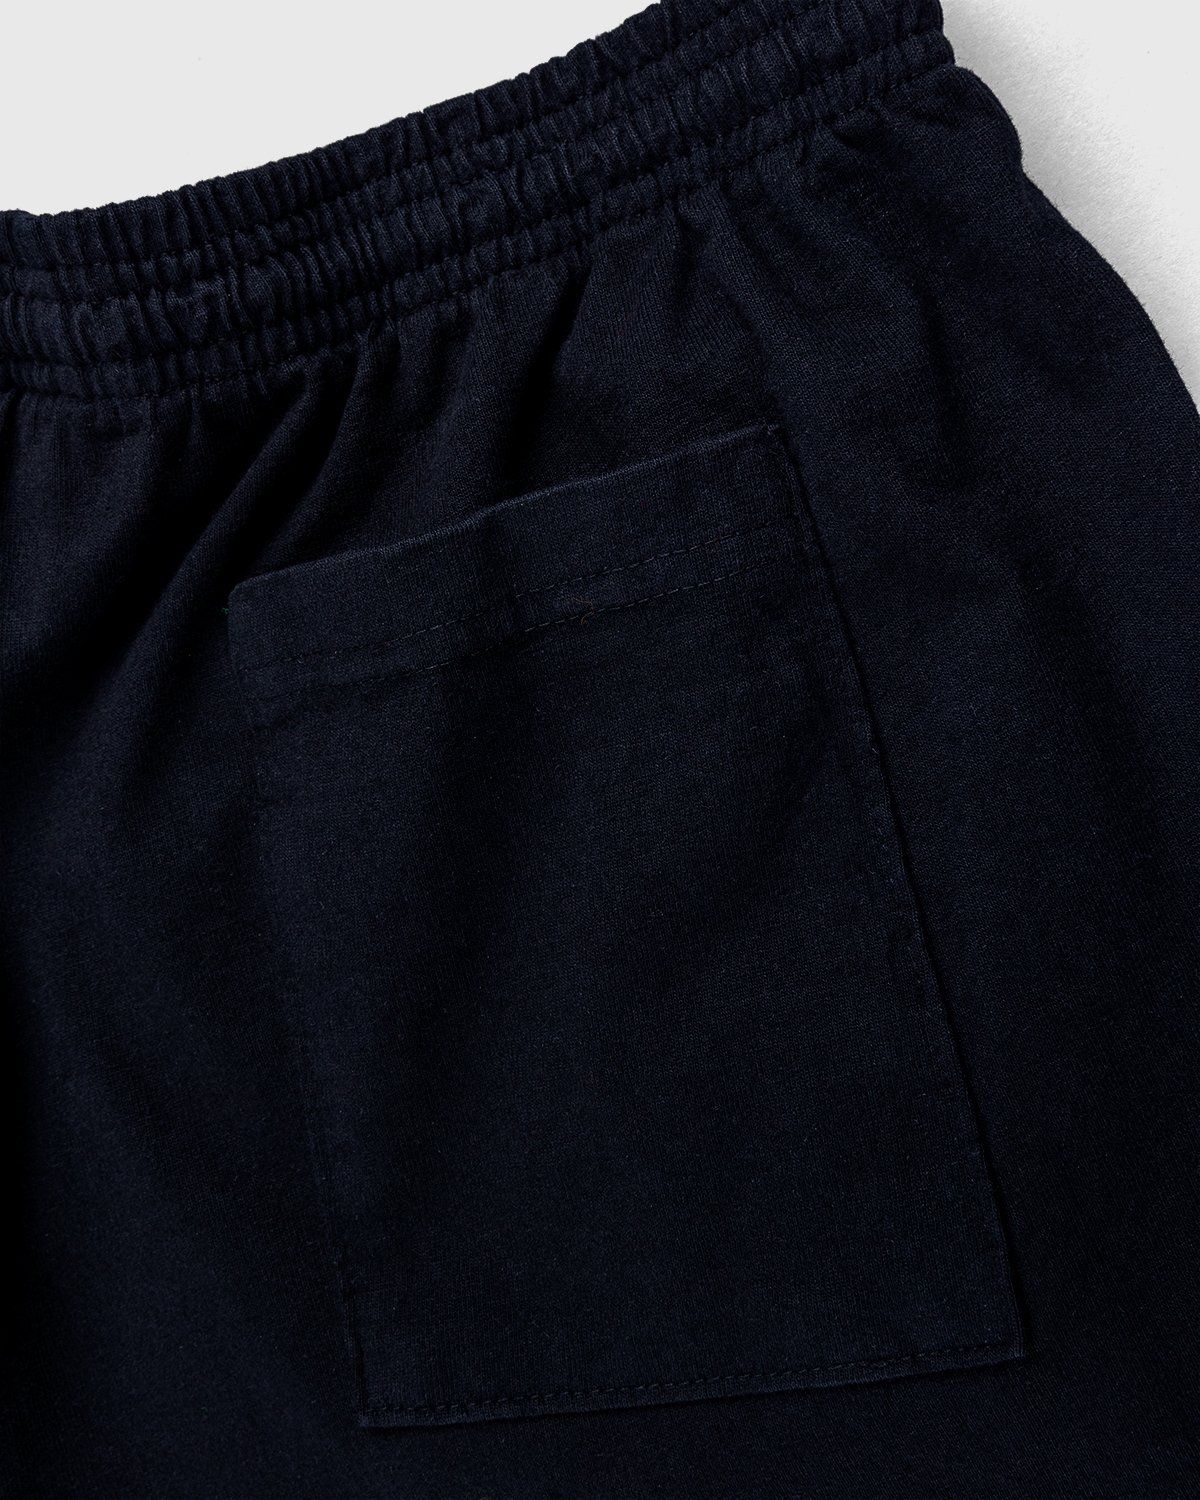 Bstroy x Highsnobiety – Shorts Black - Sweatshorts - Black - Image 3